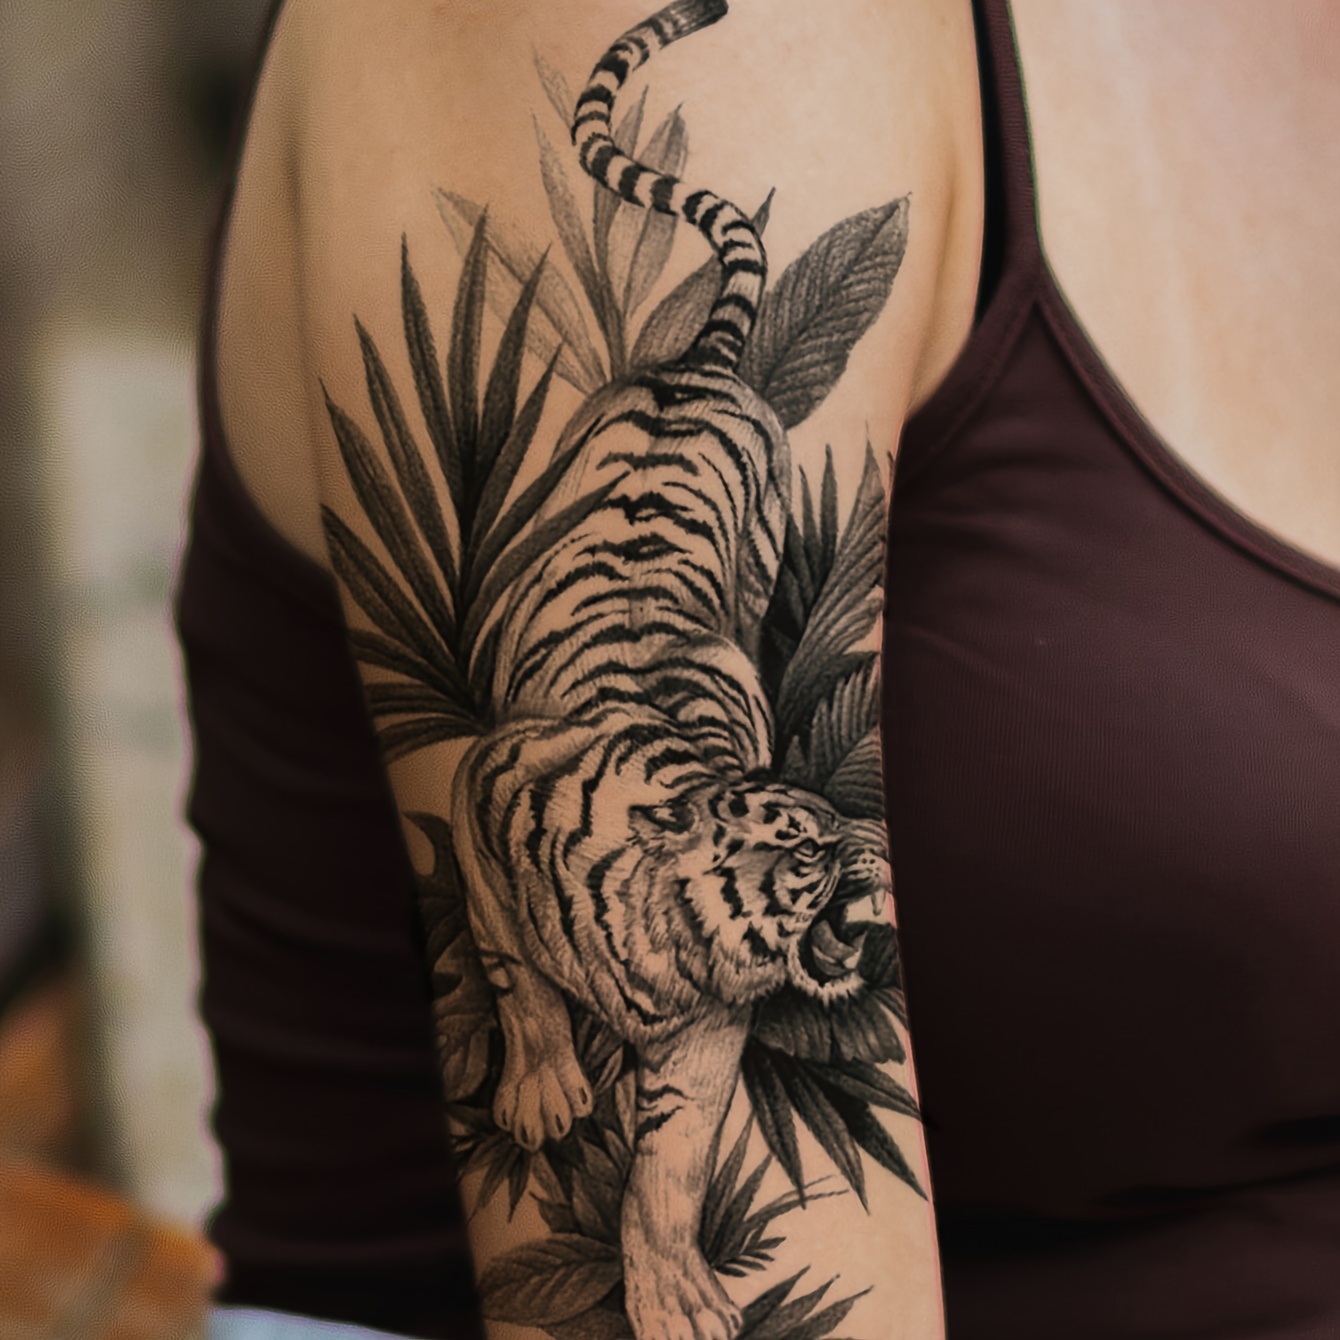 Espalda de tigre y calavera 🐯💀 #tattoo #tattooideas #tattoos #tattoomodel  #tattooart #tattooartist #ink #inktattoo #tattoodesign #